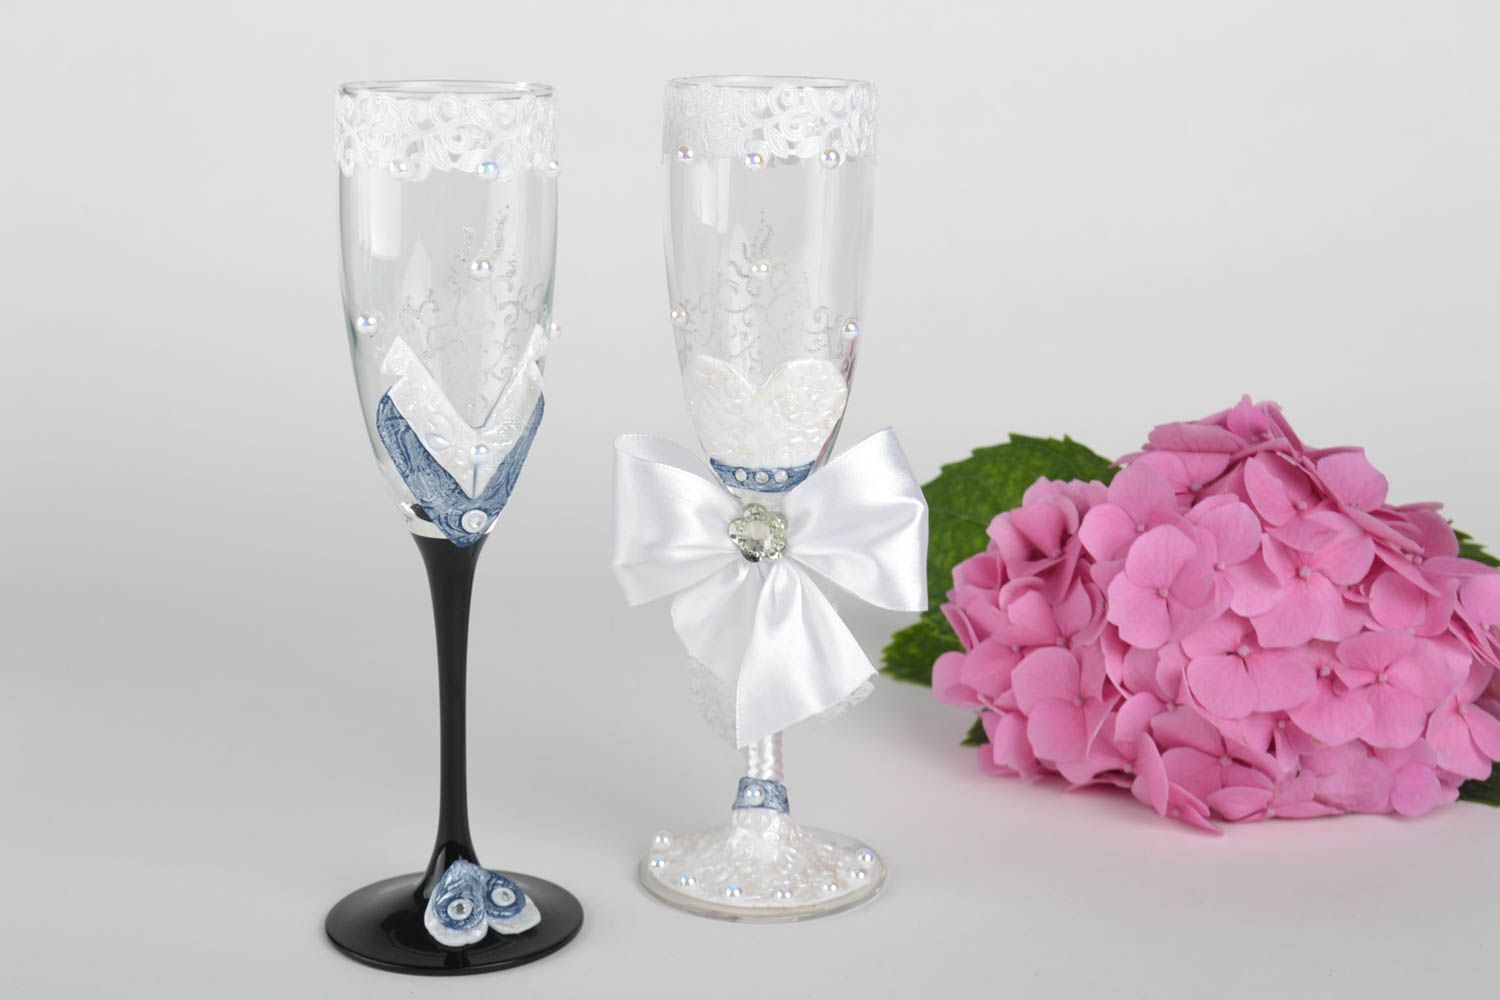 Wedding champagne glasses set of 2 decorative wine glasses handmade decorations photo 1